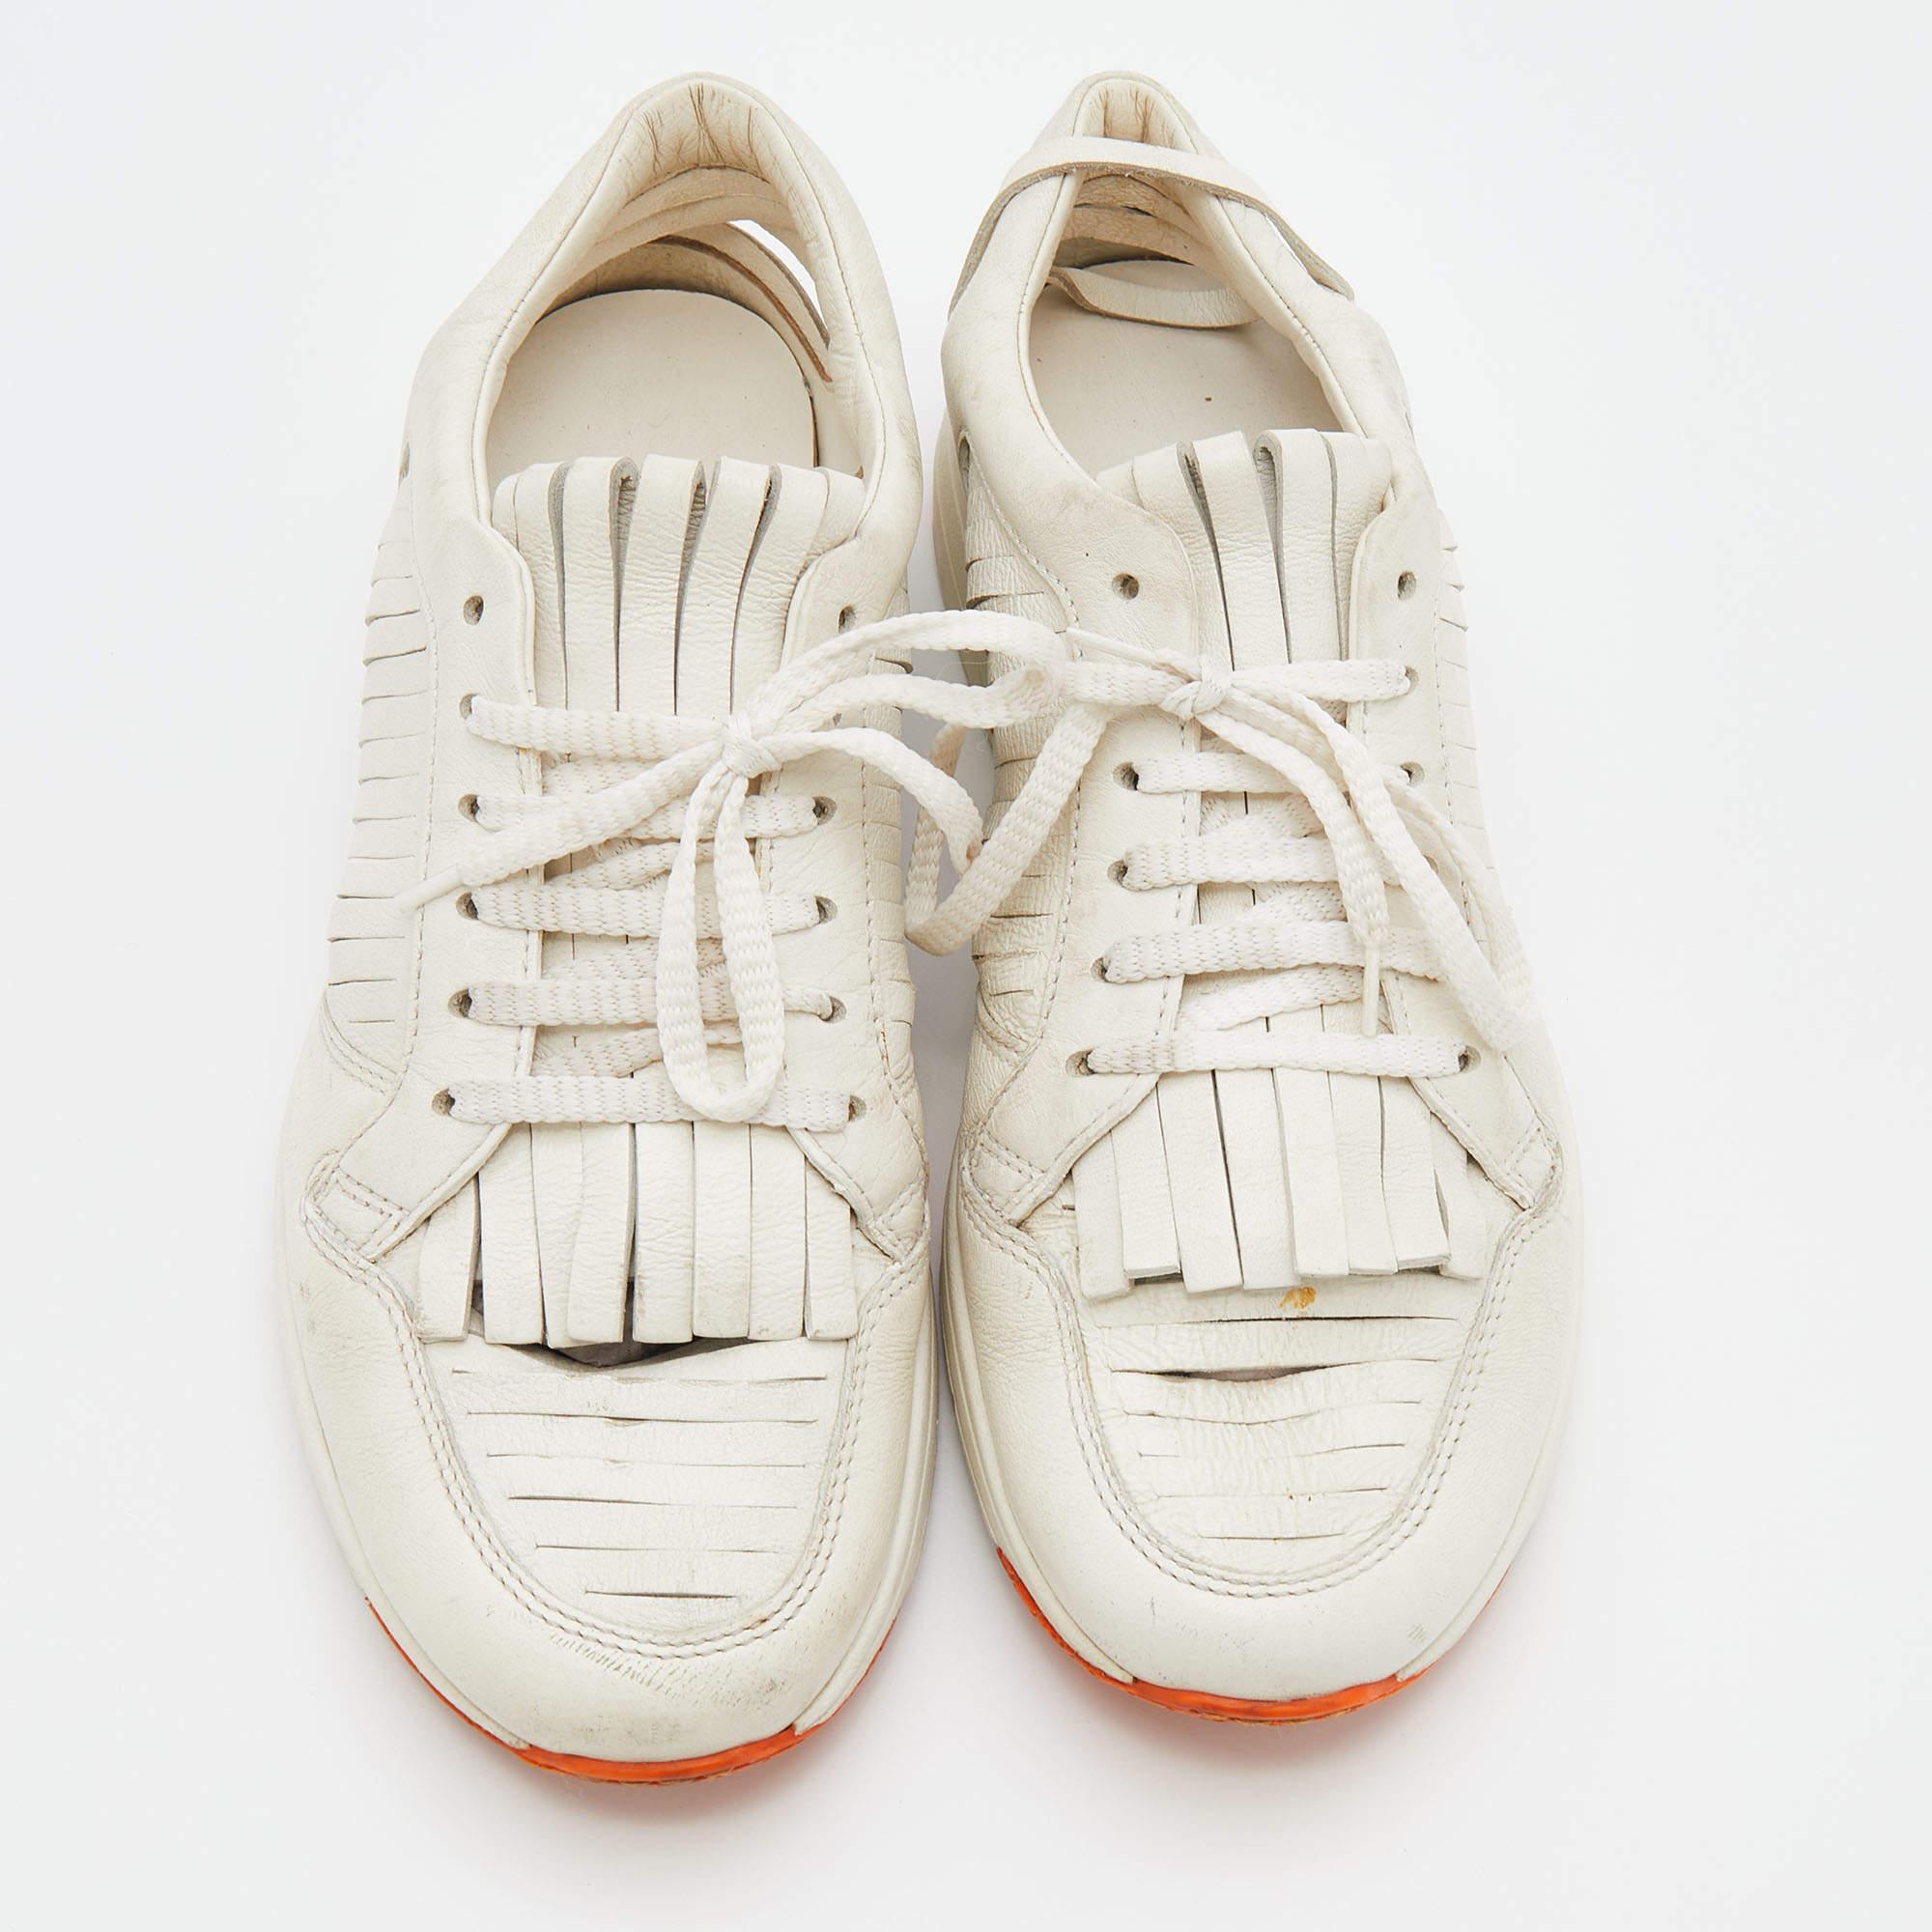 Gucci White Leather Tassel Low Top Sneakers Size 36.5 In Good Condition For Sale In Dubai, Al Qouz 2